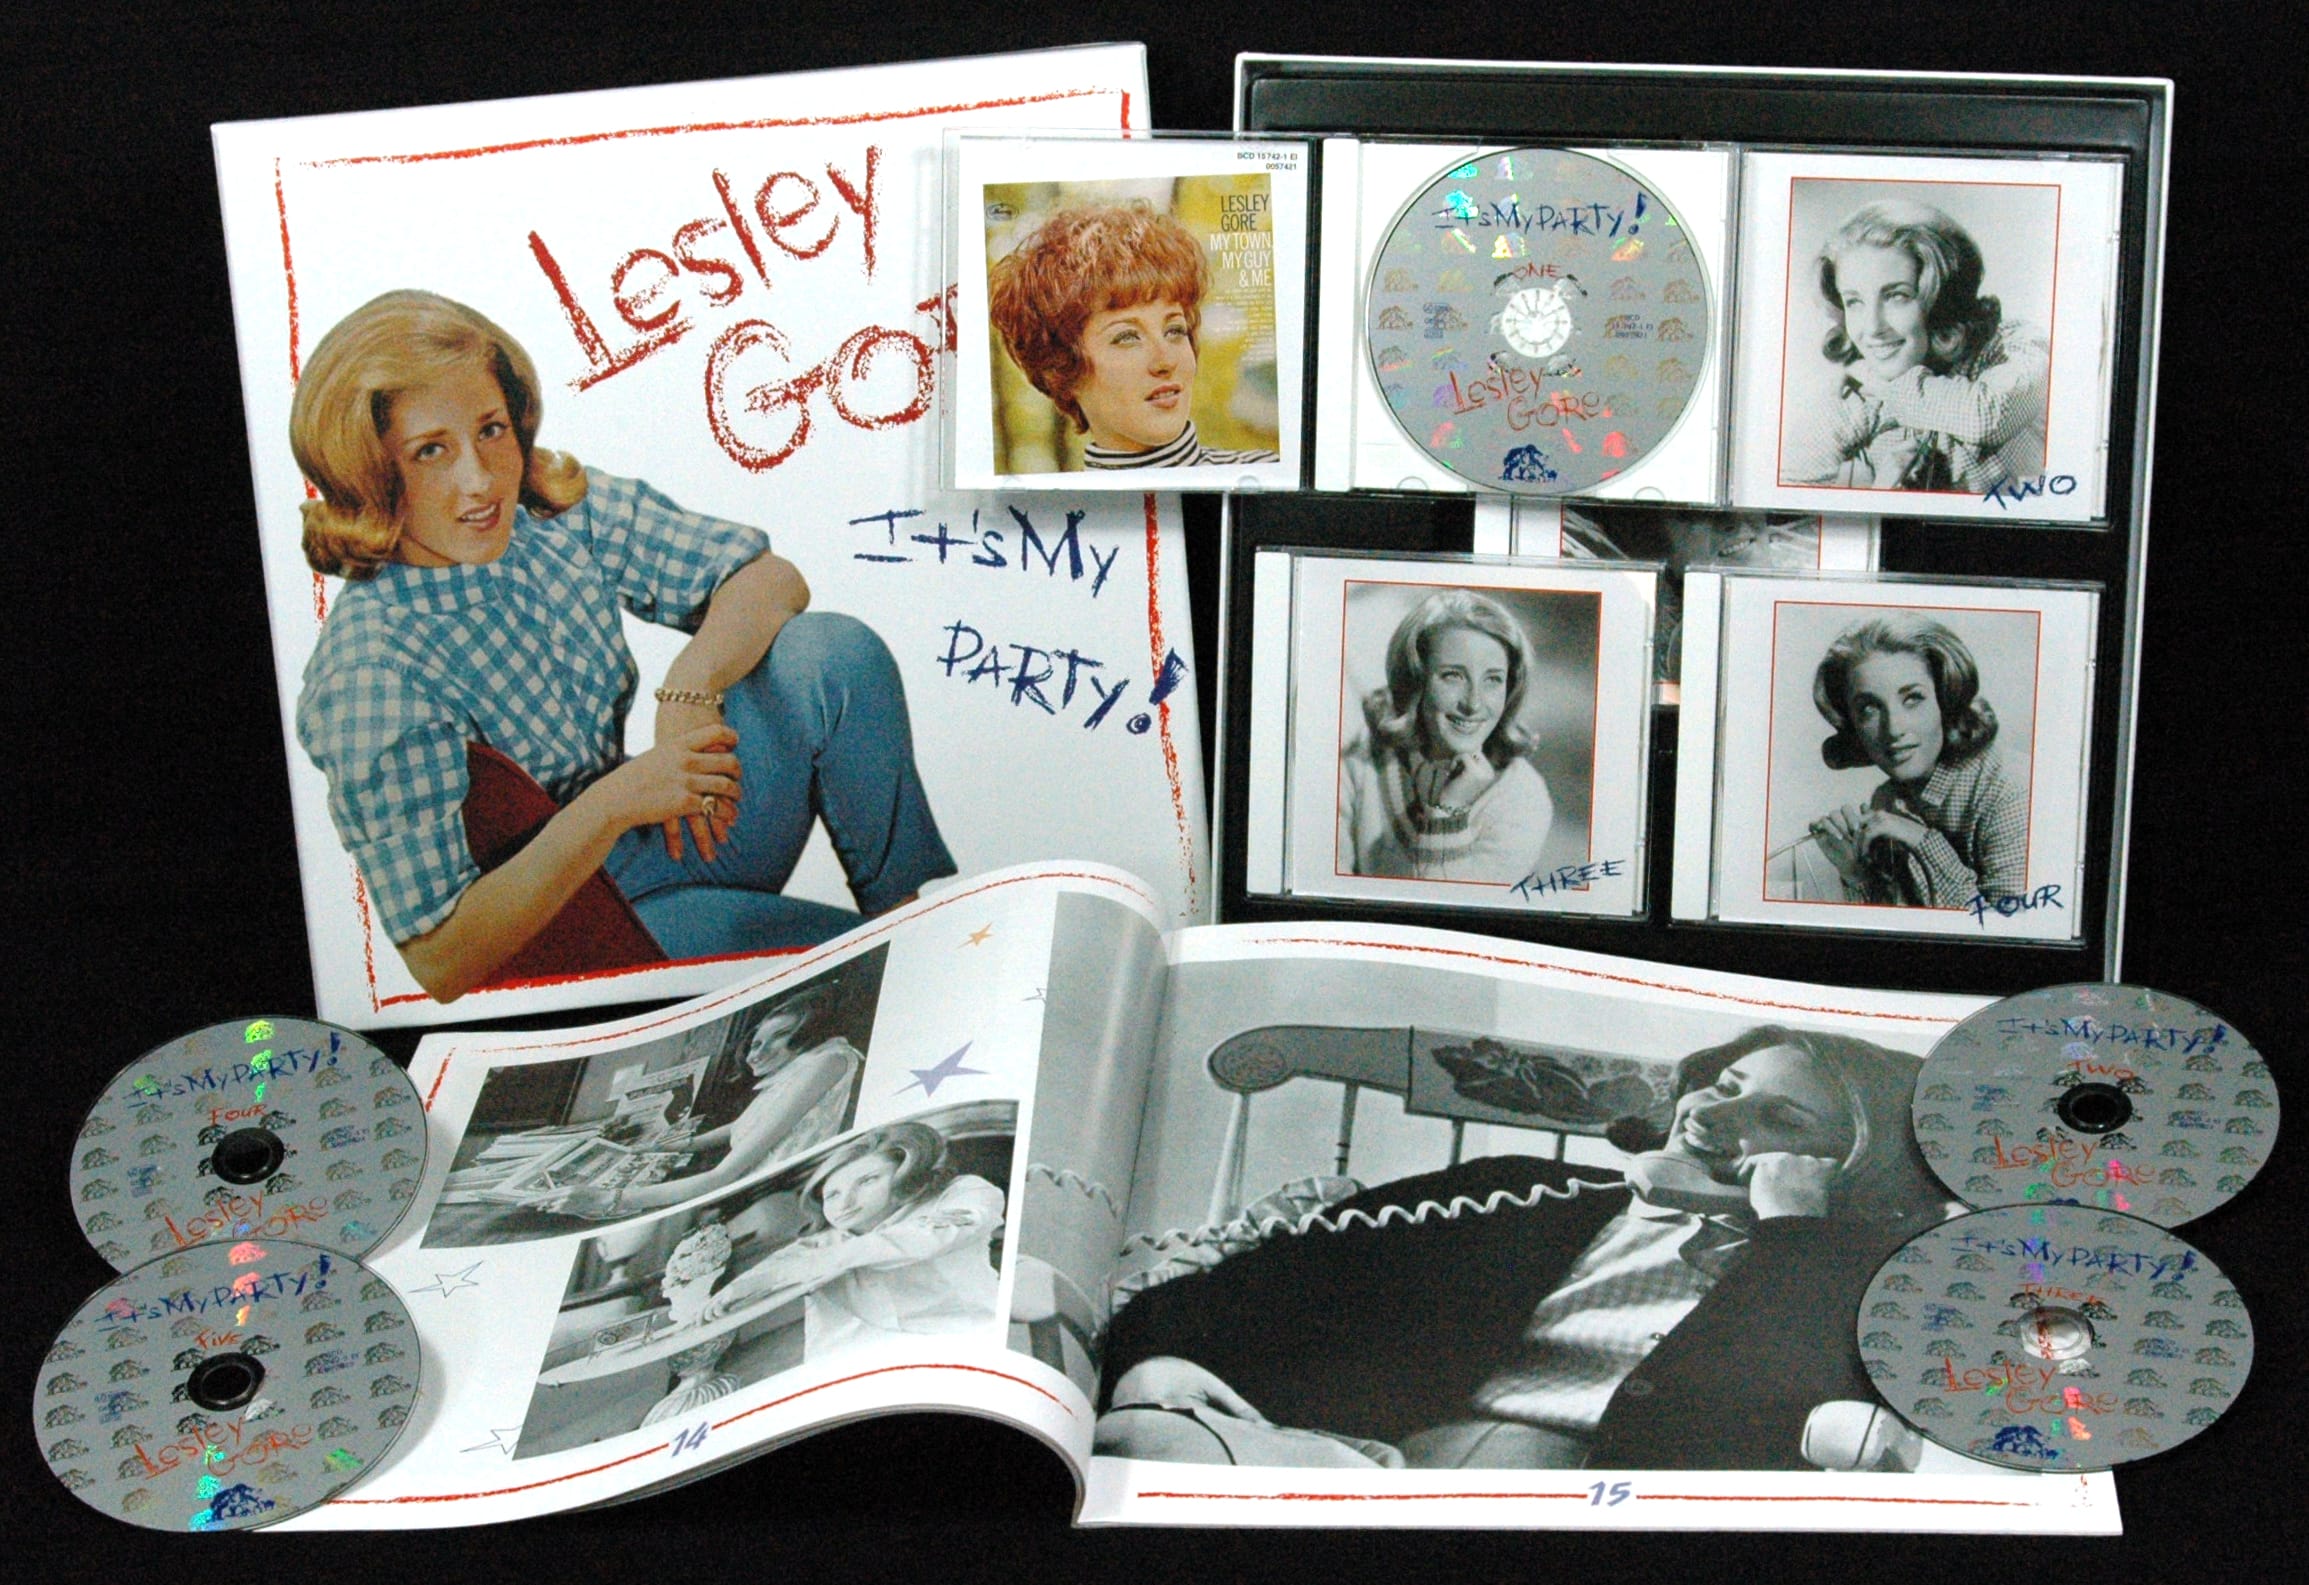 Lesley Gore Box set: It's My Party (5-CD Deluxe Box Set) - Bear